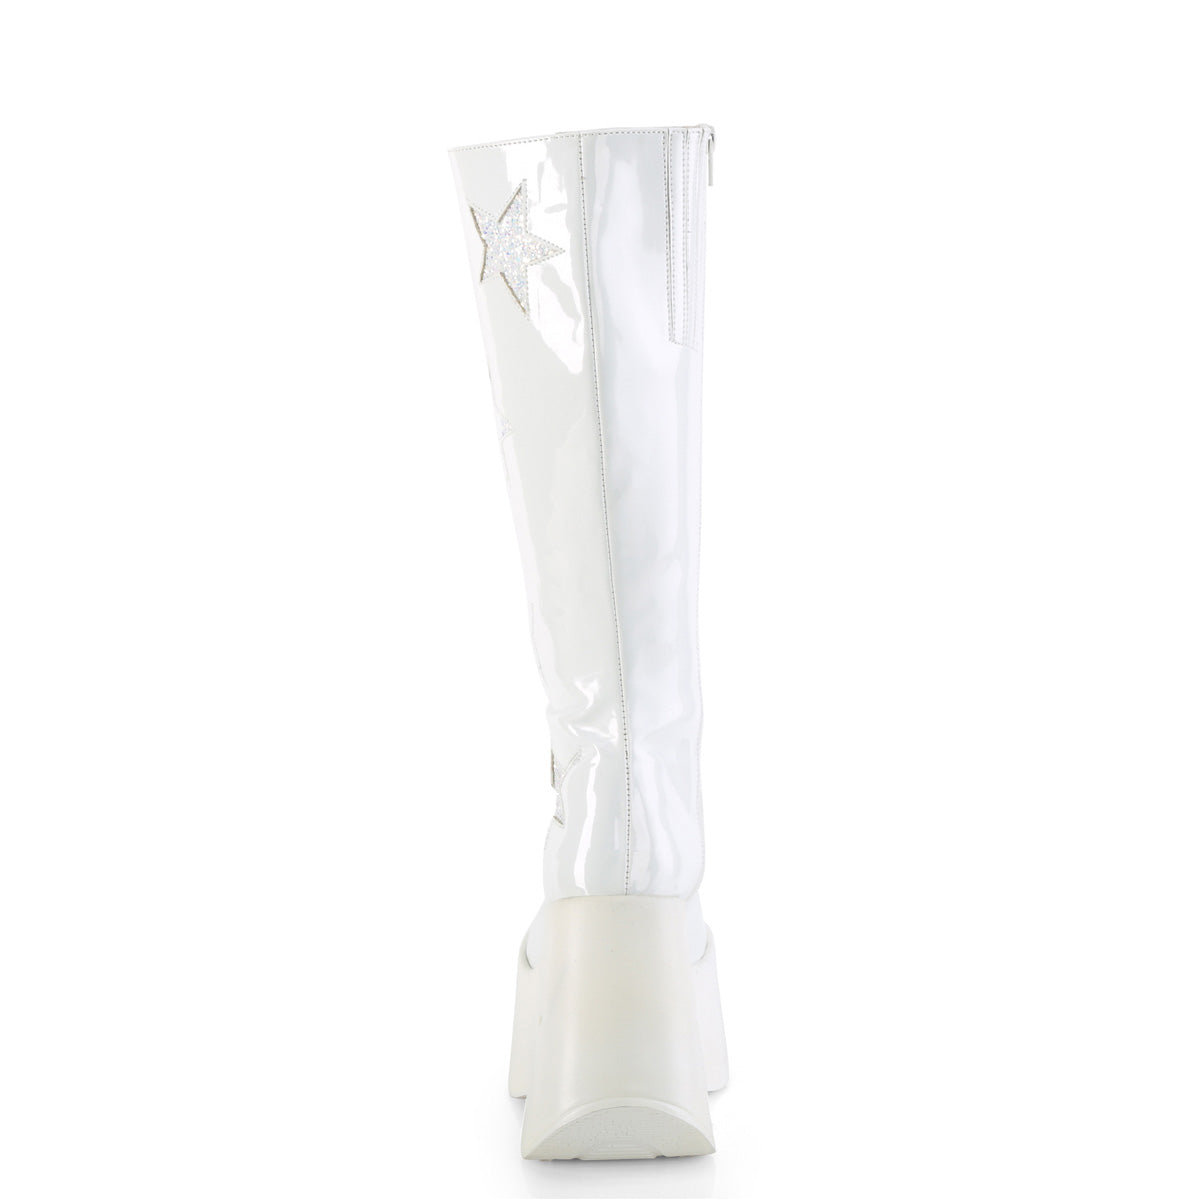 DYNAMITE-218 Demonia White Patent-White Multi Glitter Women's Mid-Calf & Knee High Boots [Demonia Cult Alternative Footwear]